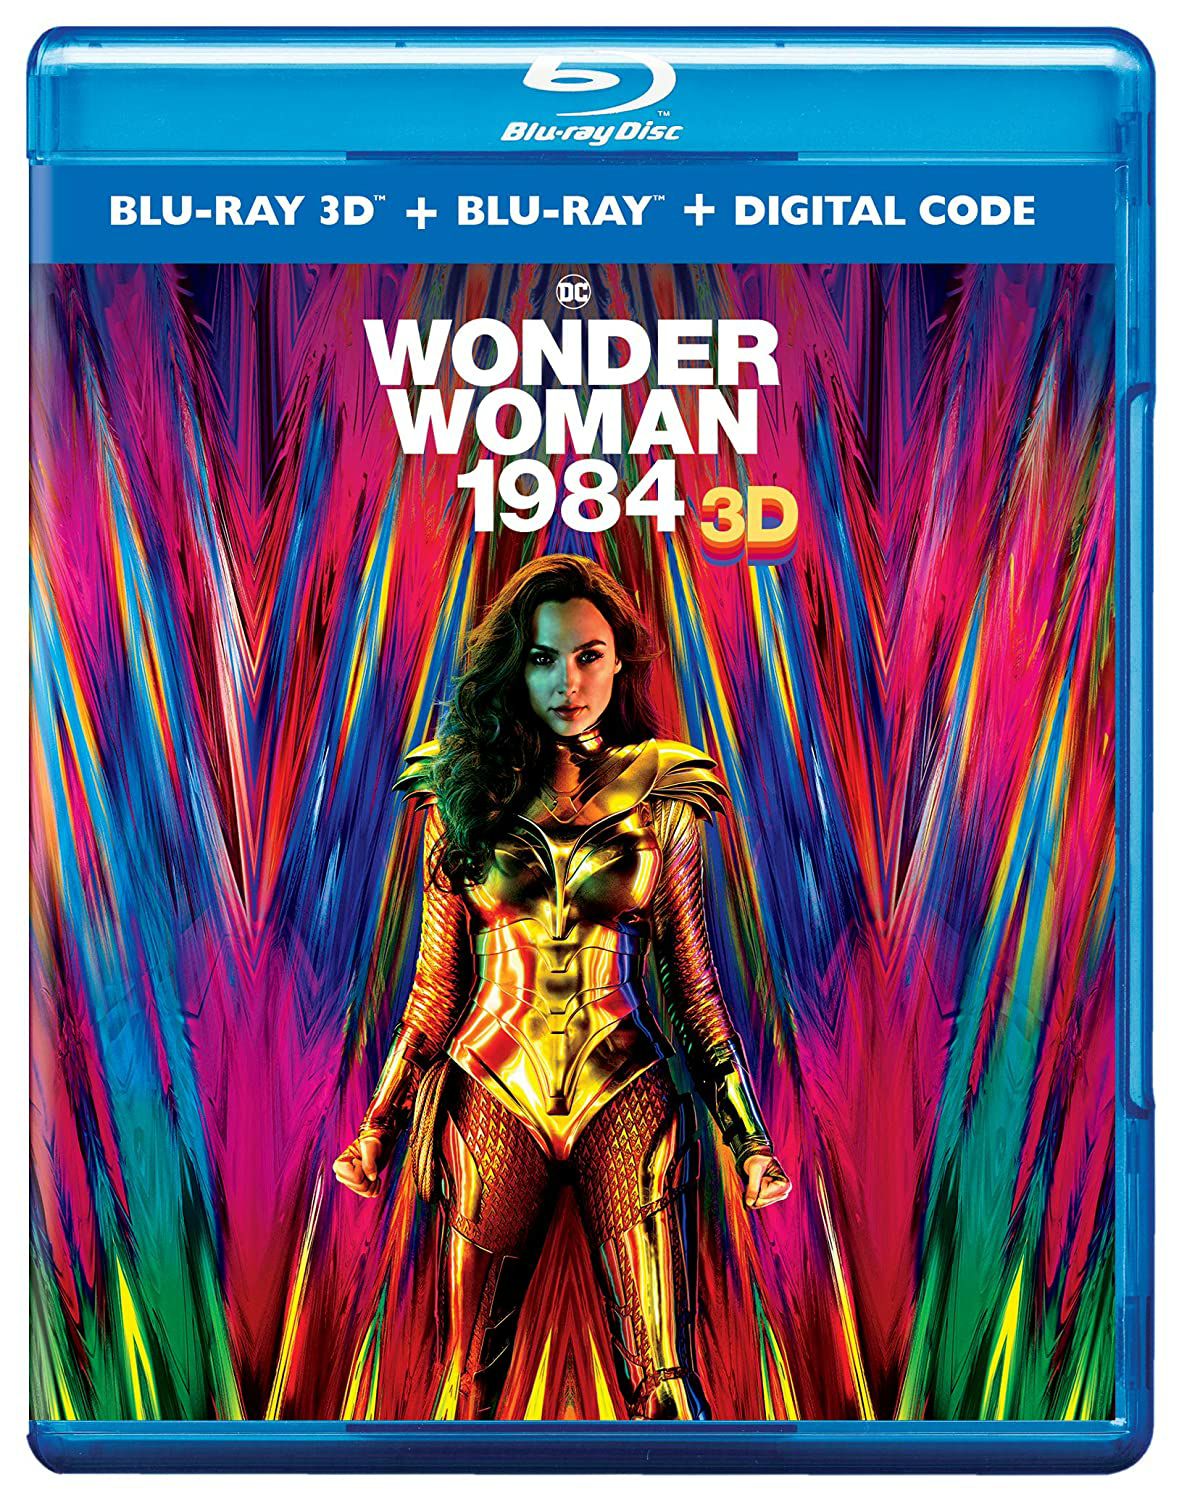 Wonder Woman 1984 3D Blu-ray Amazon $13.60